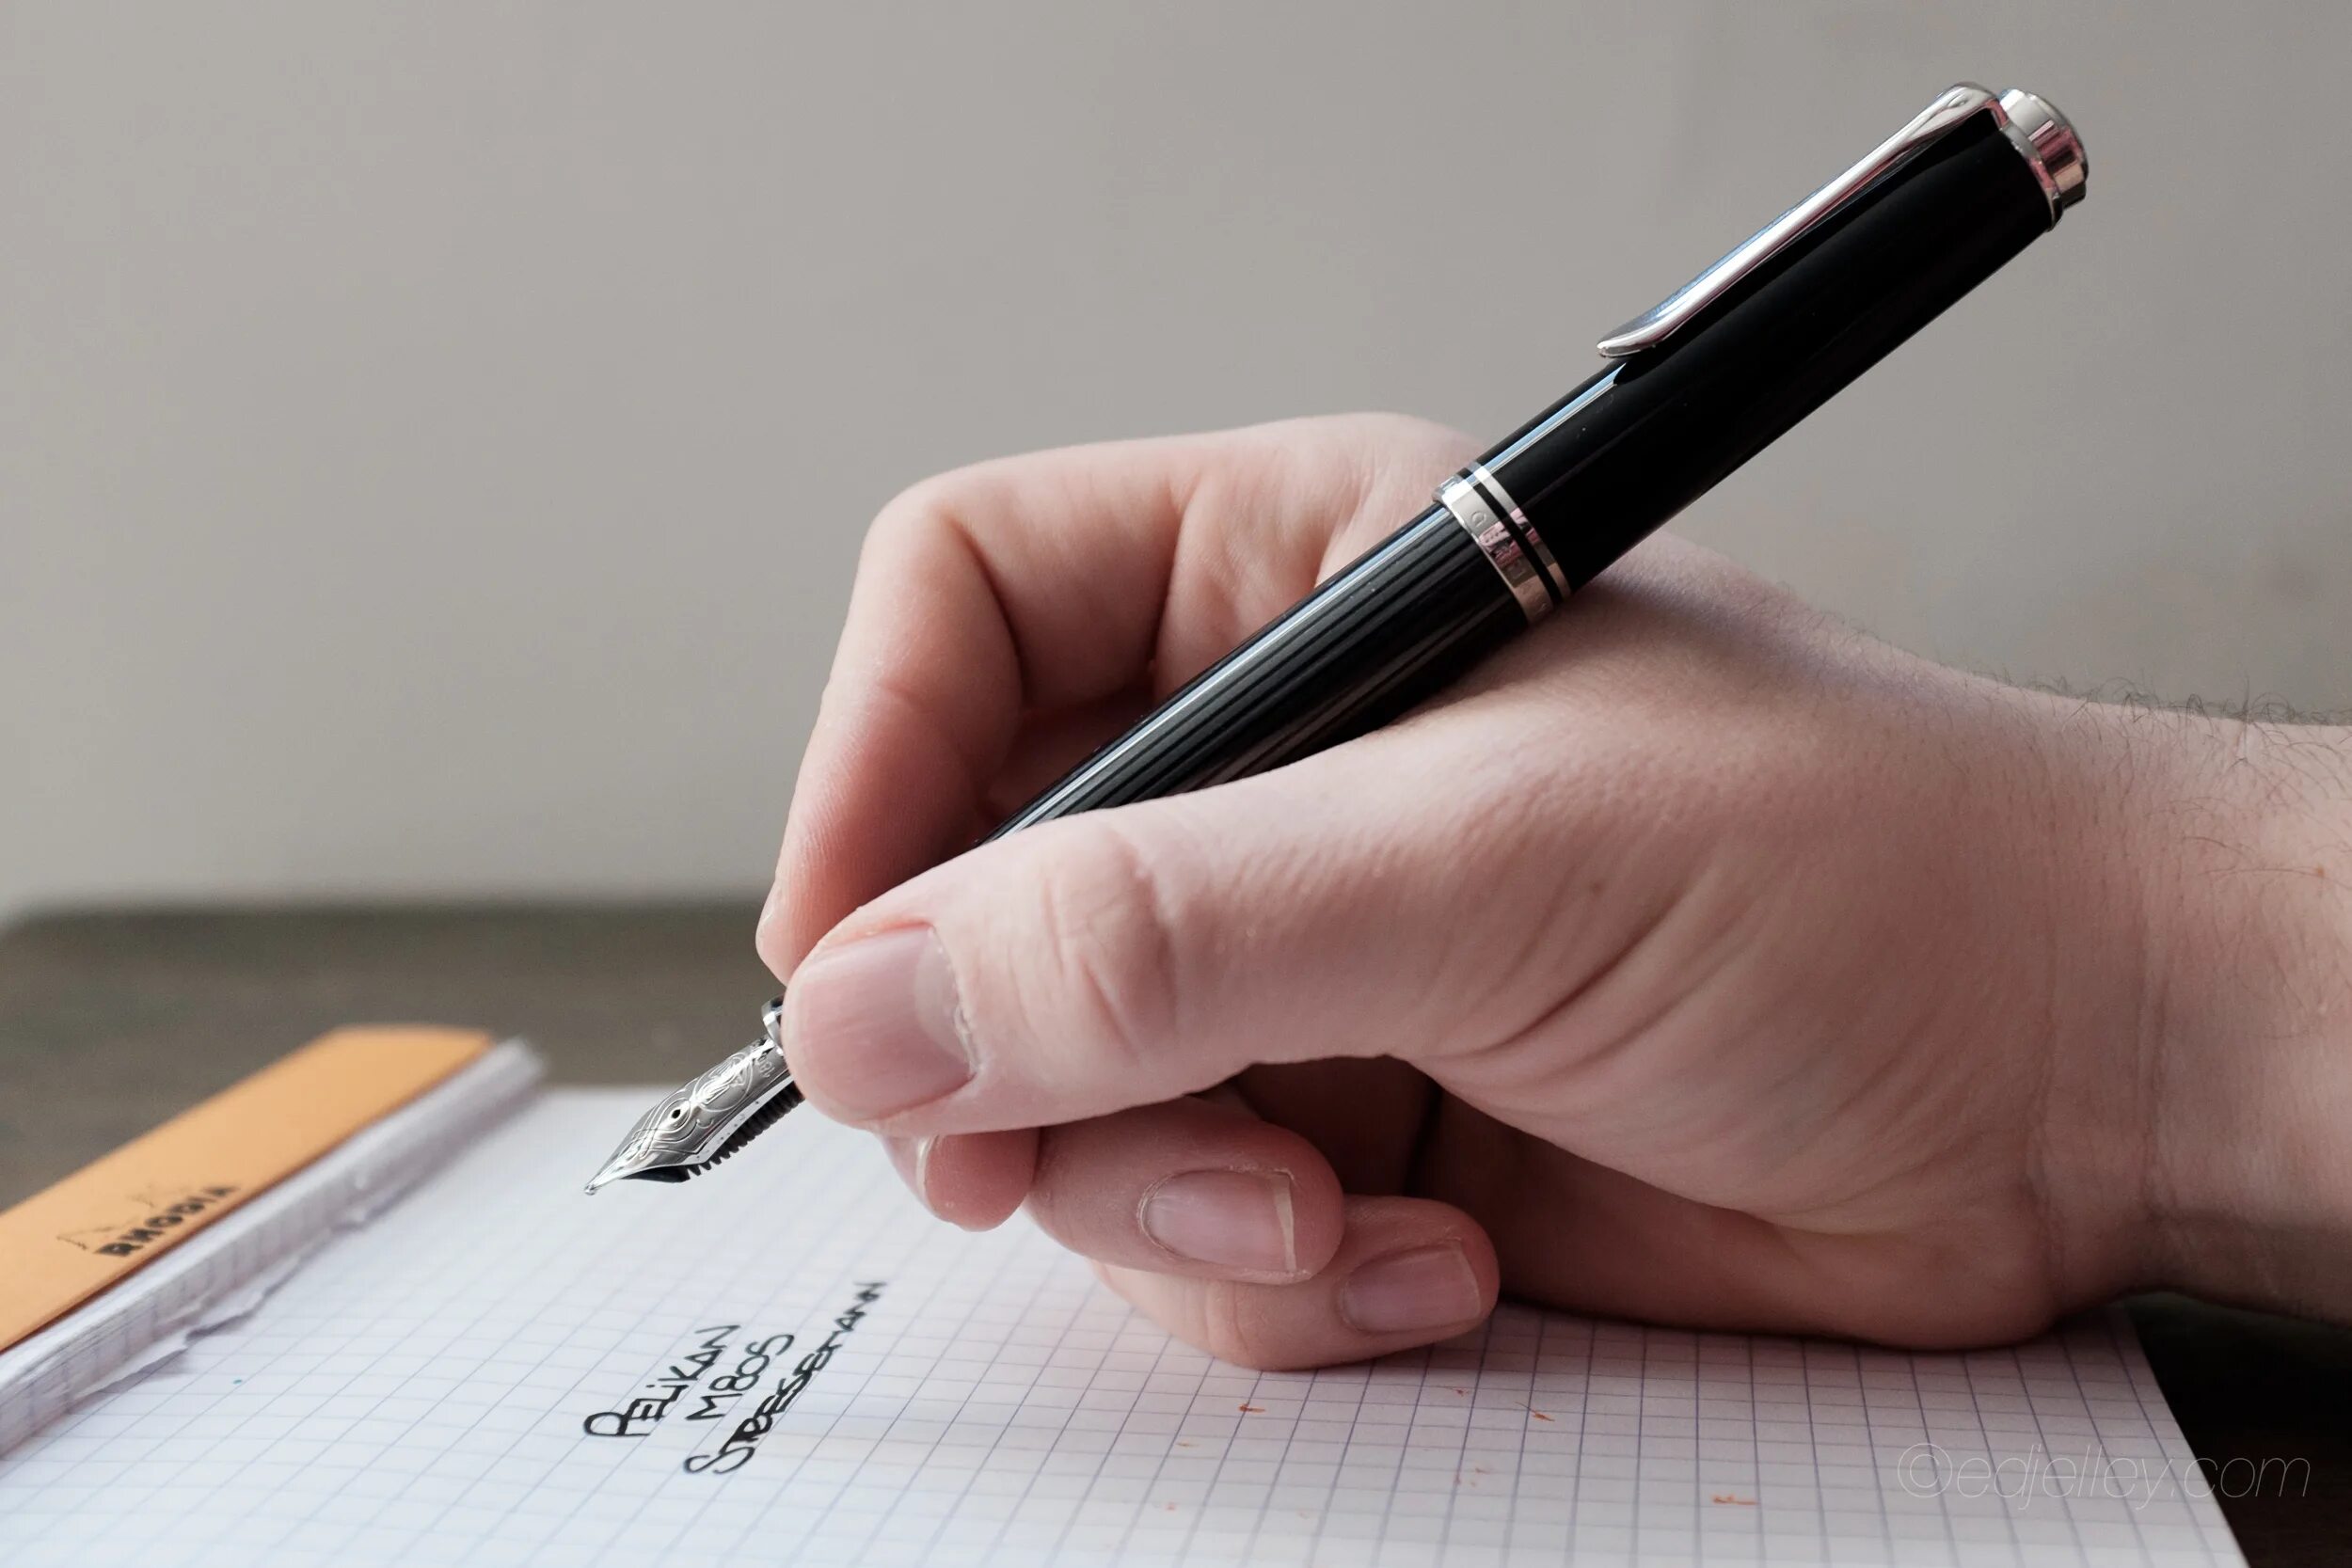 Magic write ручка. Writing Pen заказать. Pen is writing ong. Written with a pen